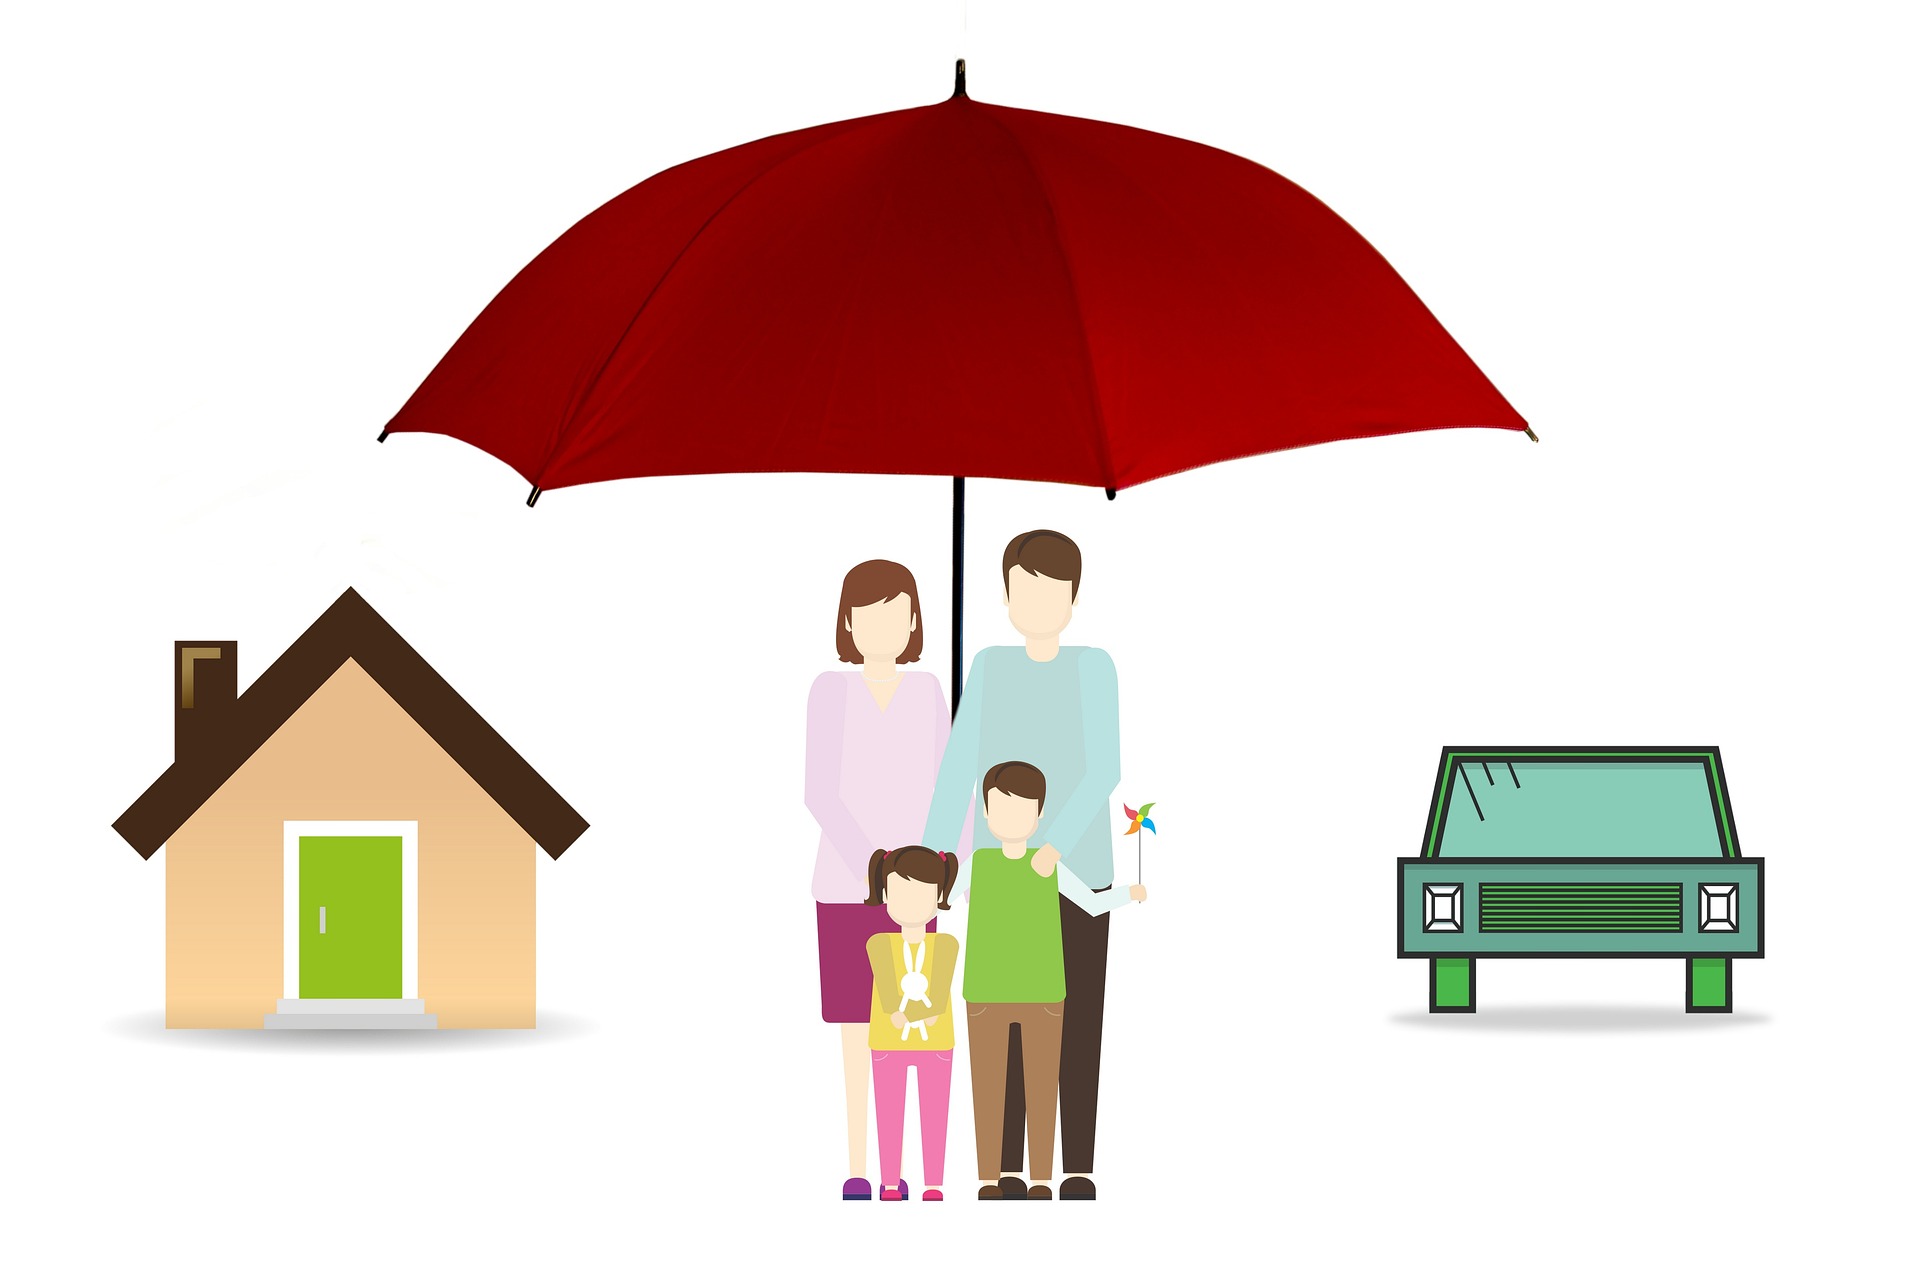 a family under a red umbrella